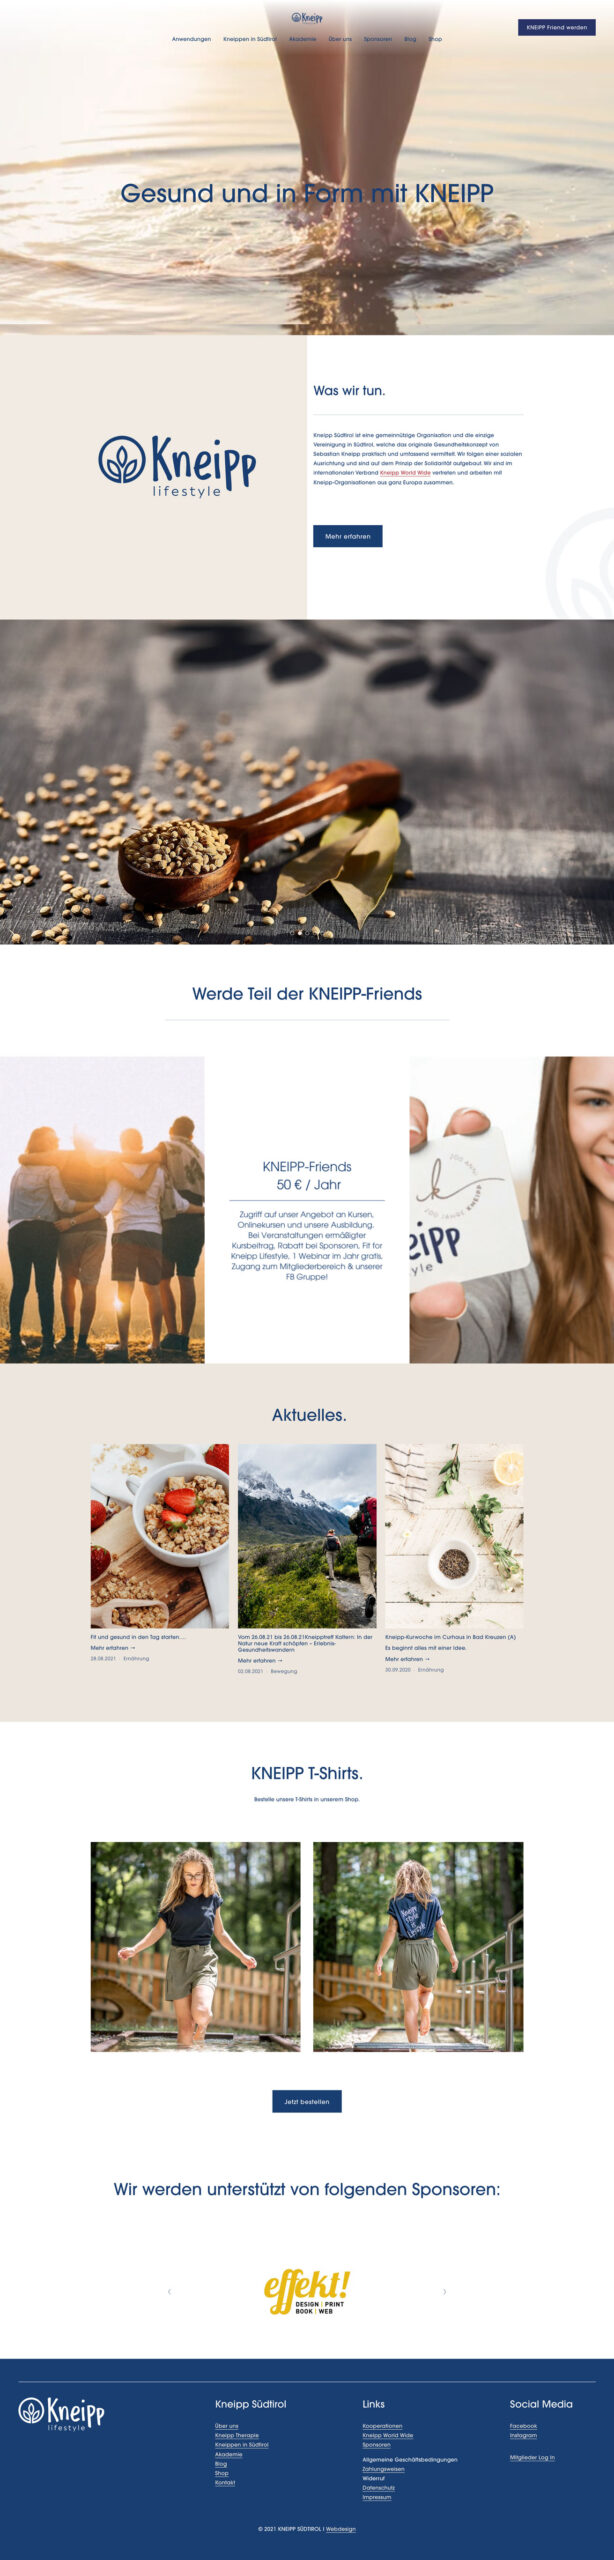 Kneipp website overview